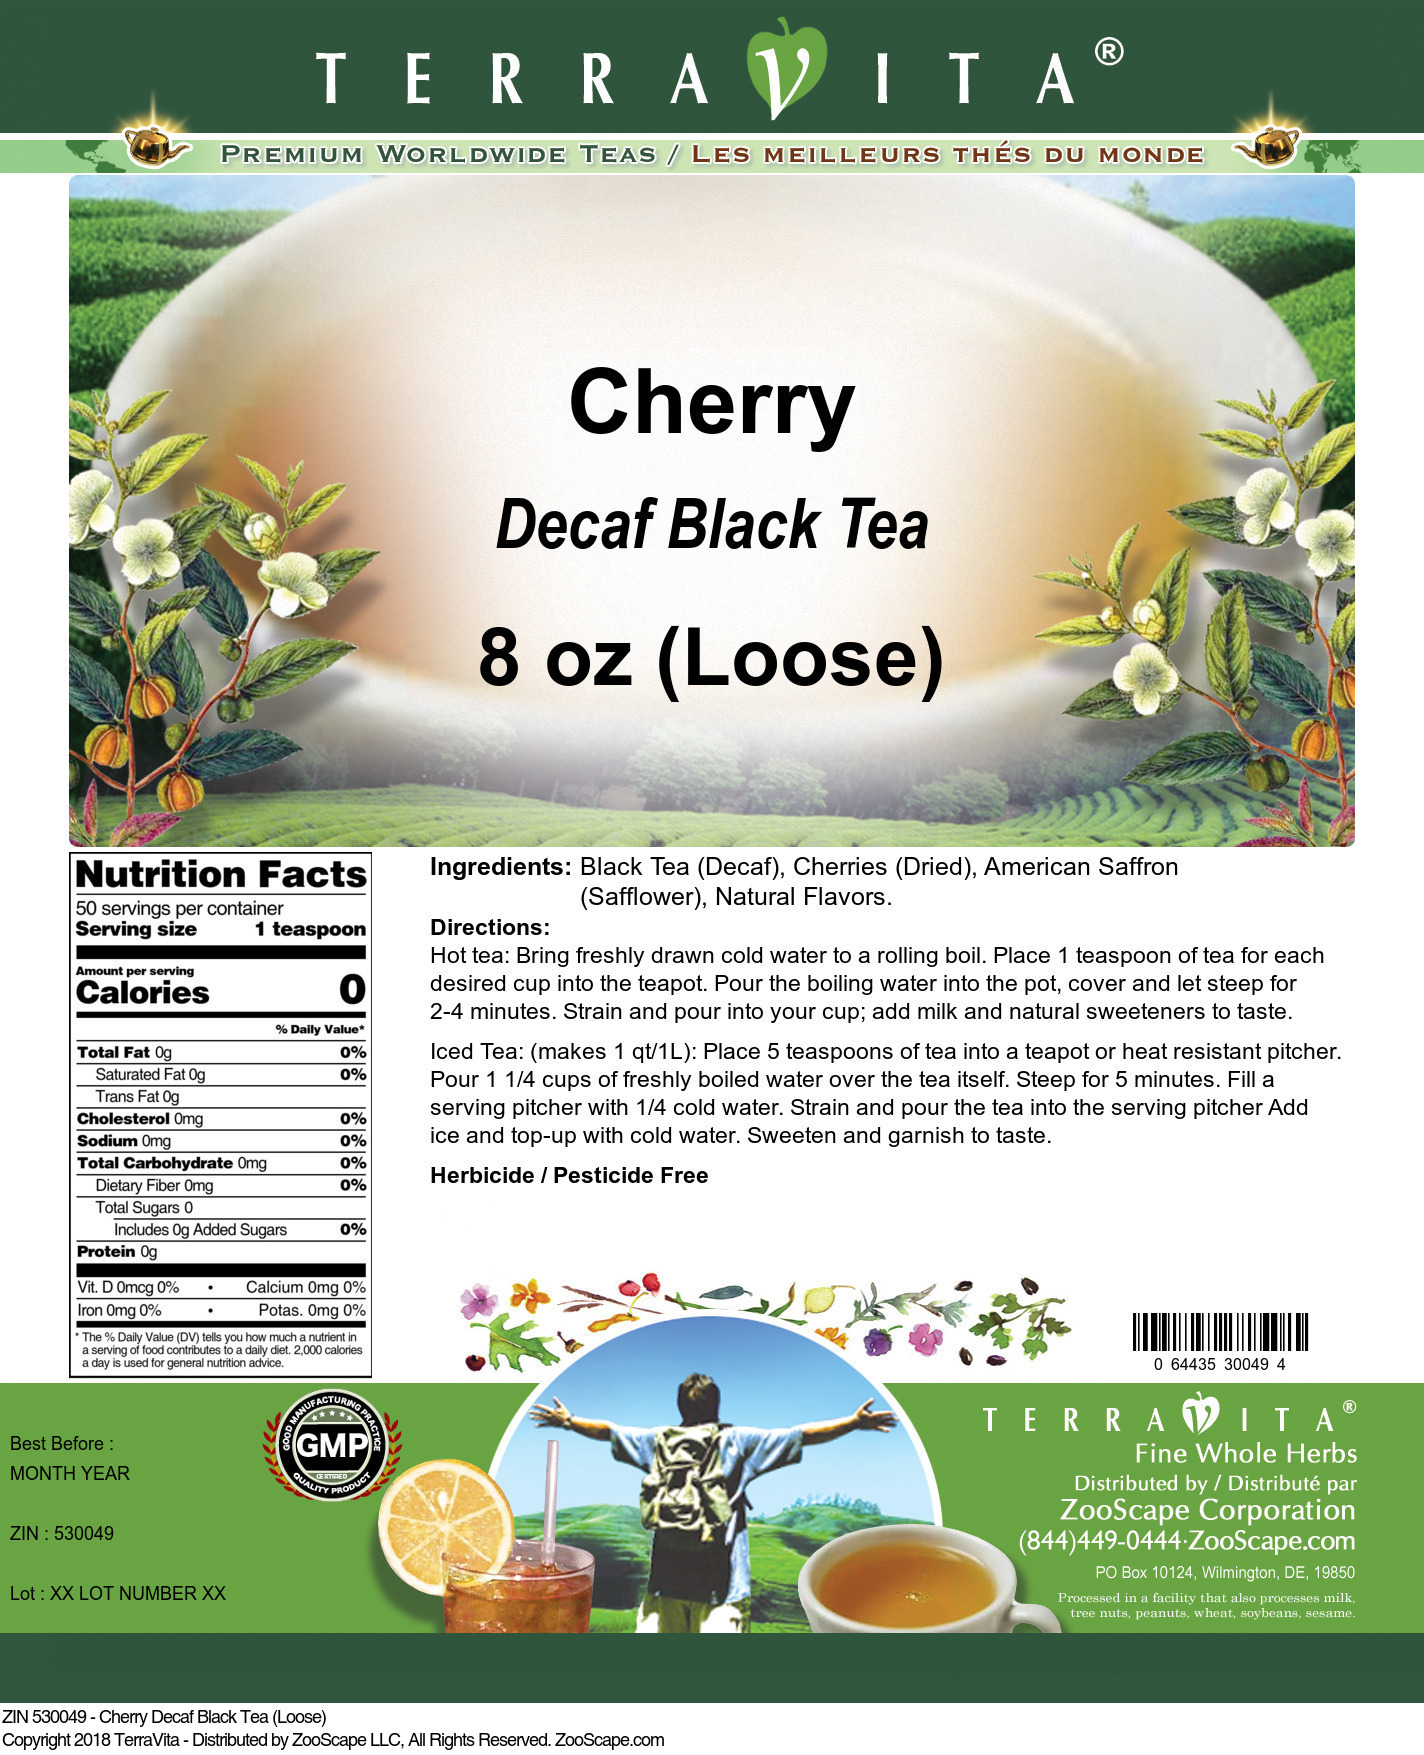 Cherry Decaf Black Tea (Loose) - Label